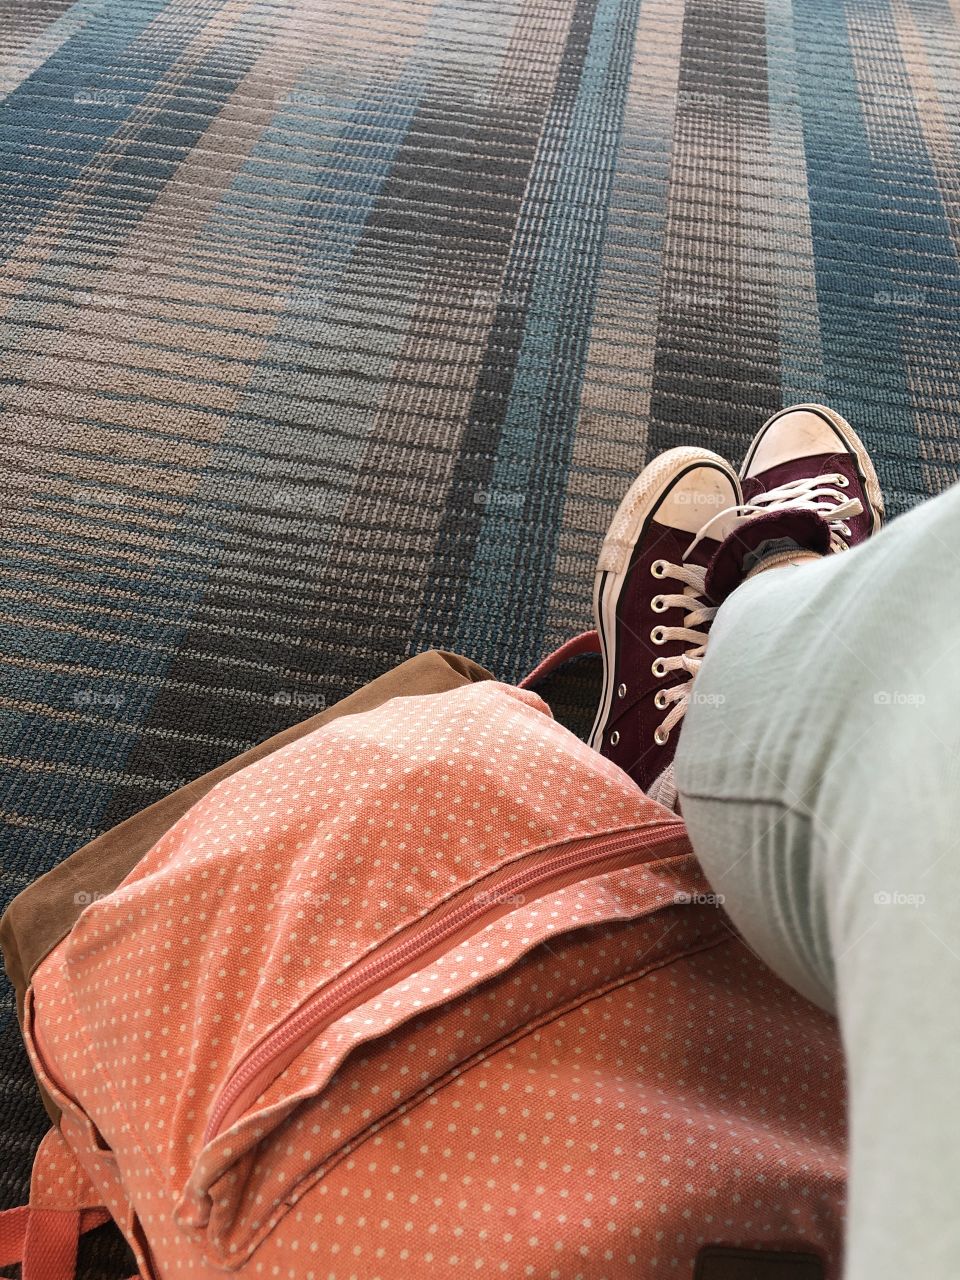 Sitting around, waiting on an airplane.